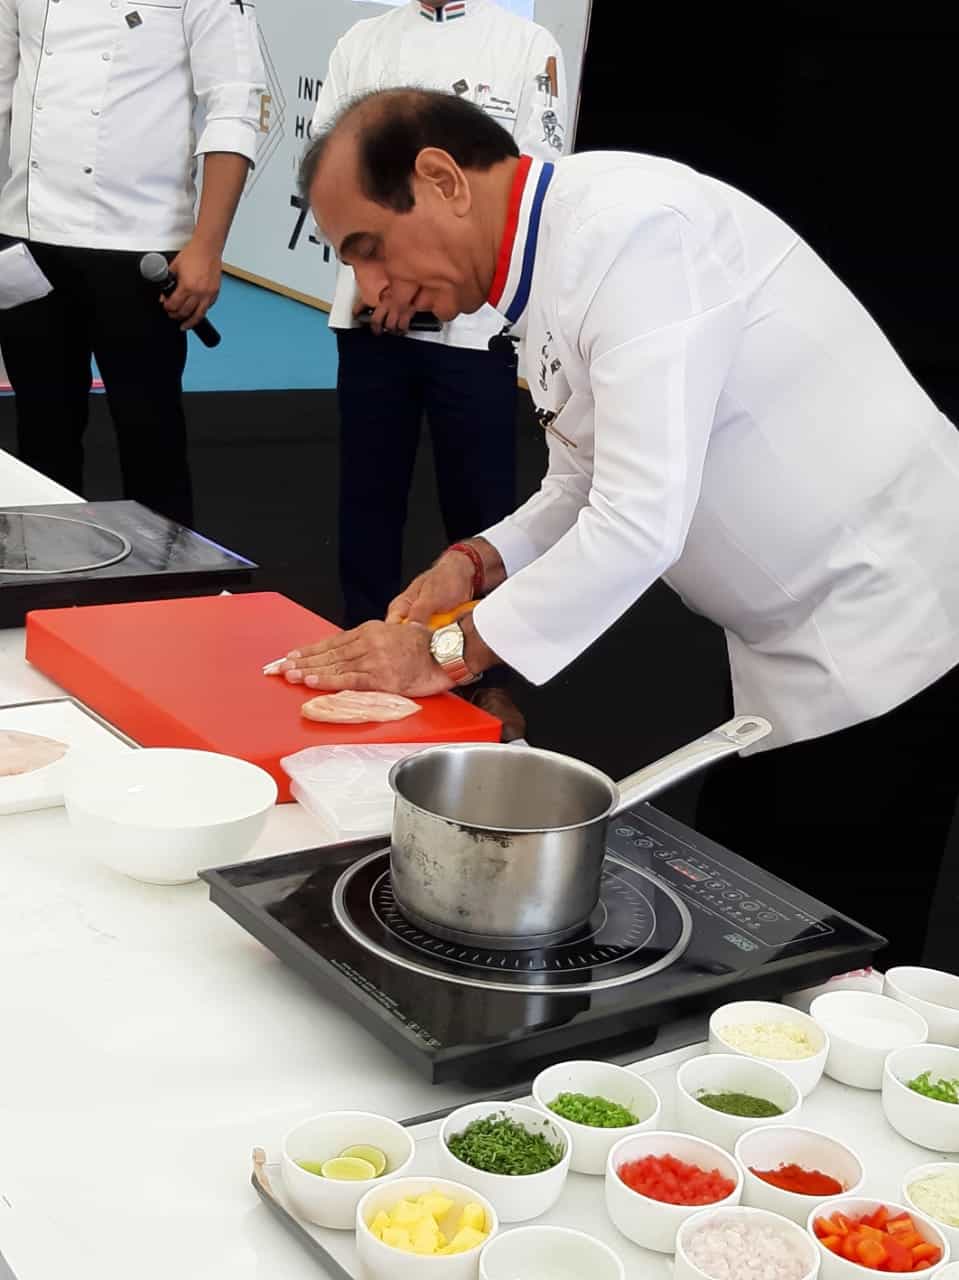 ChefDK at India International Hospitality Expo 2019